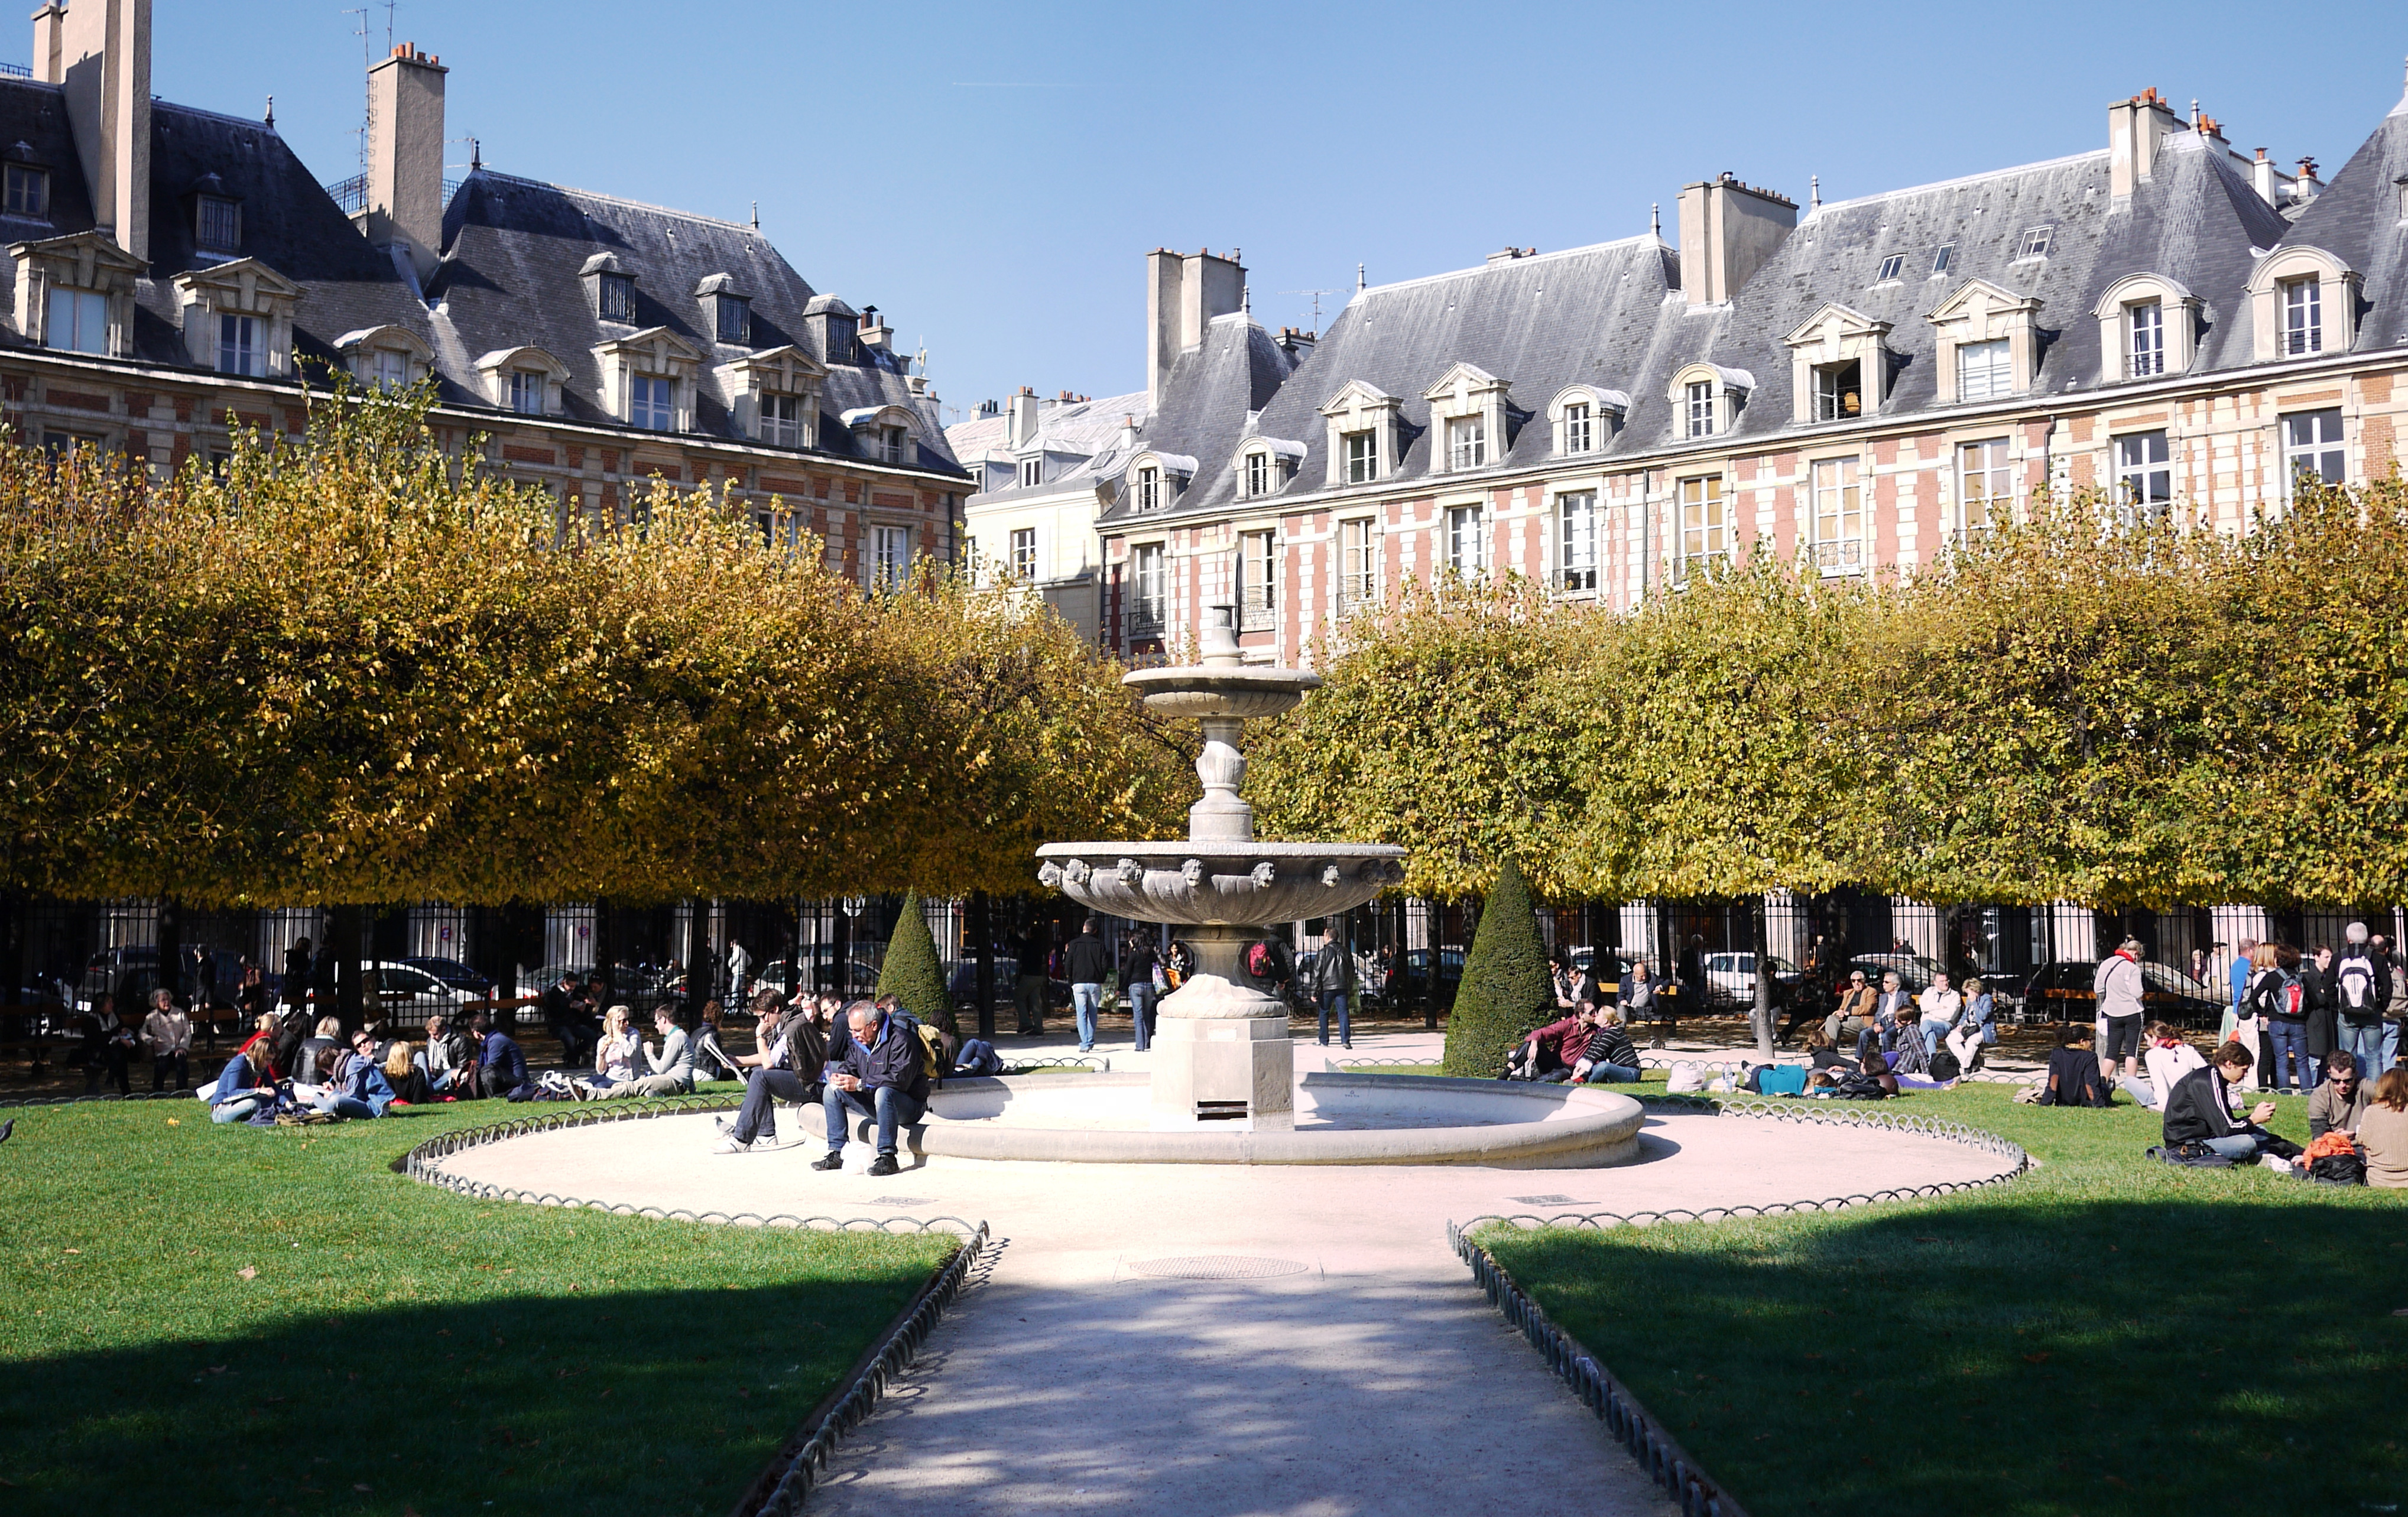 File:Places des Vosges, Paris - NW Fountain.jpg - Wikimedia Commons